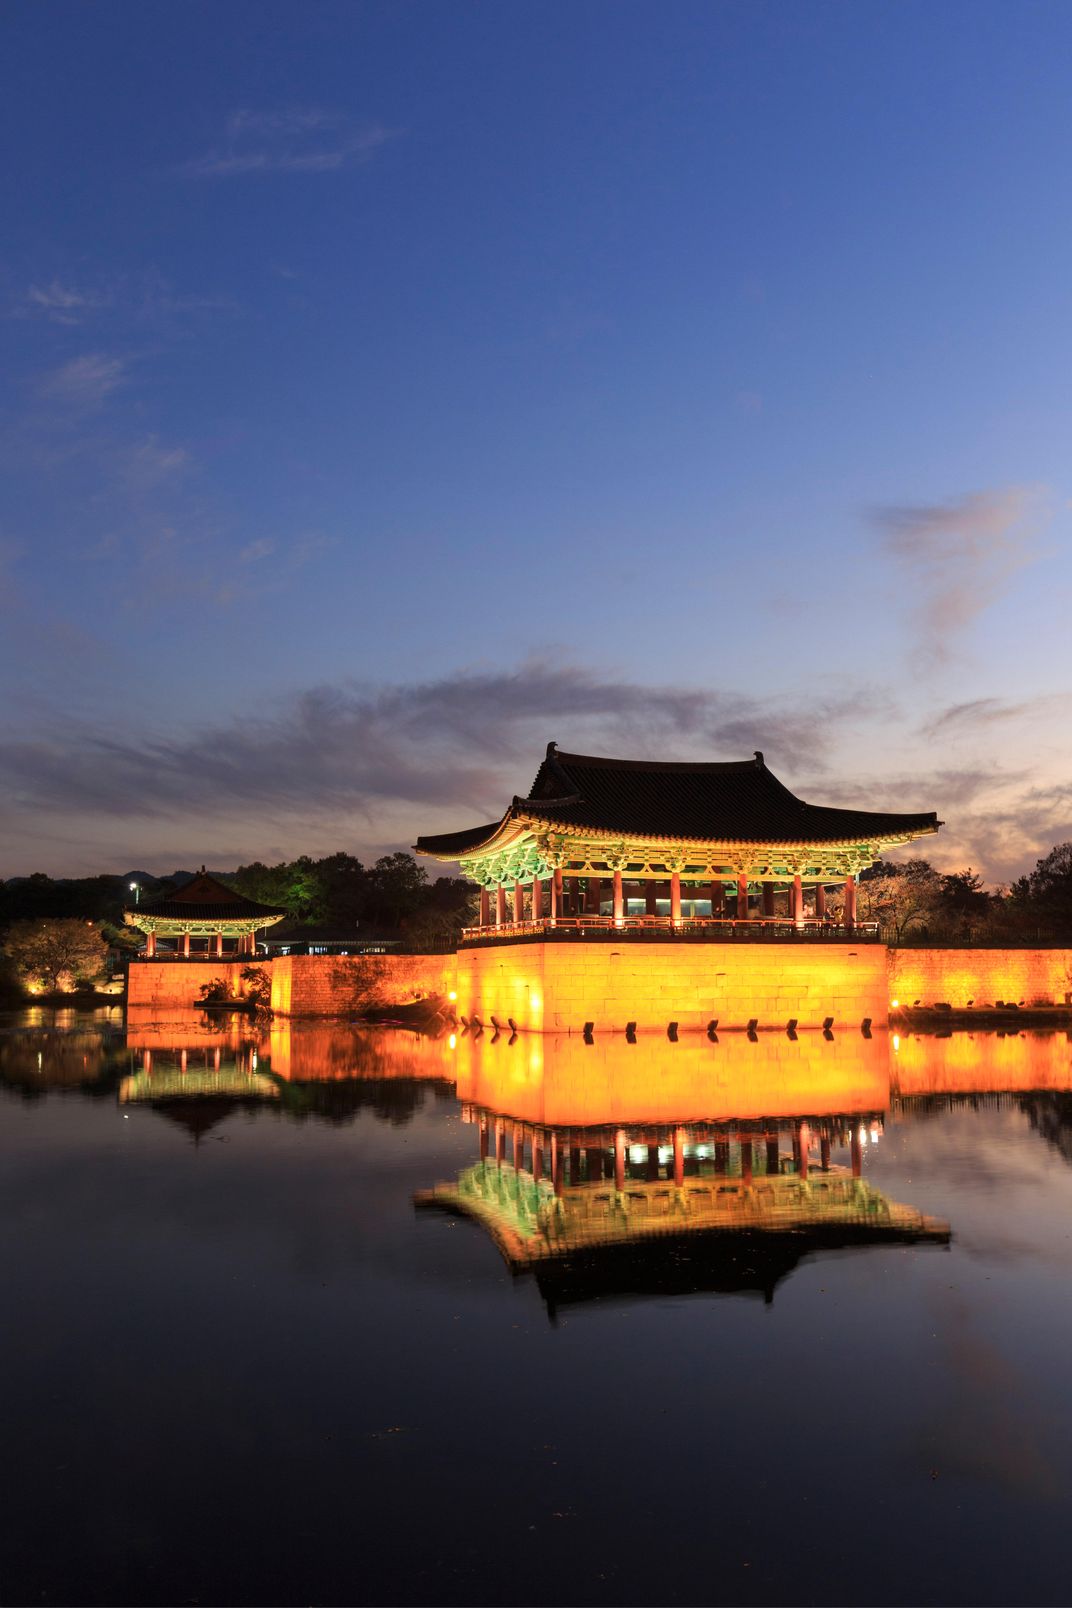 A Korean palace illuminated at night above a pond